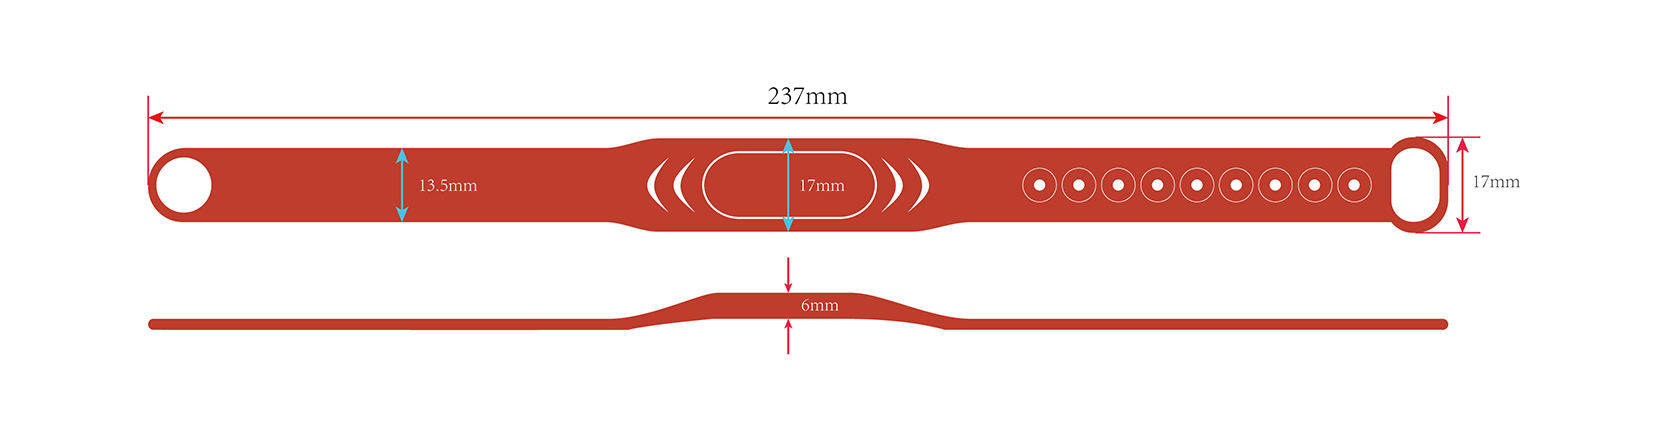 TRSB02-002 adjustable RFID silicone wristband size